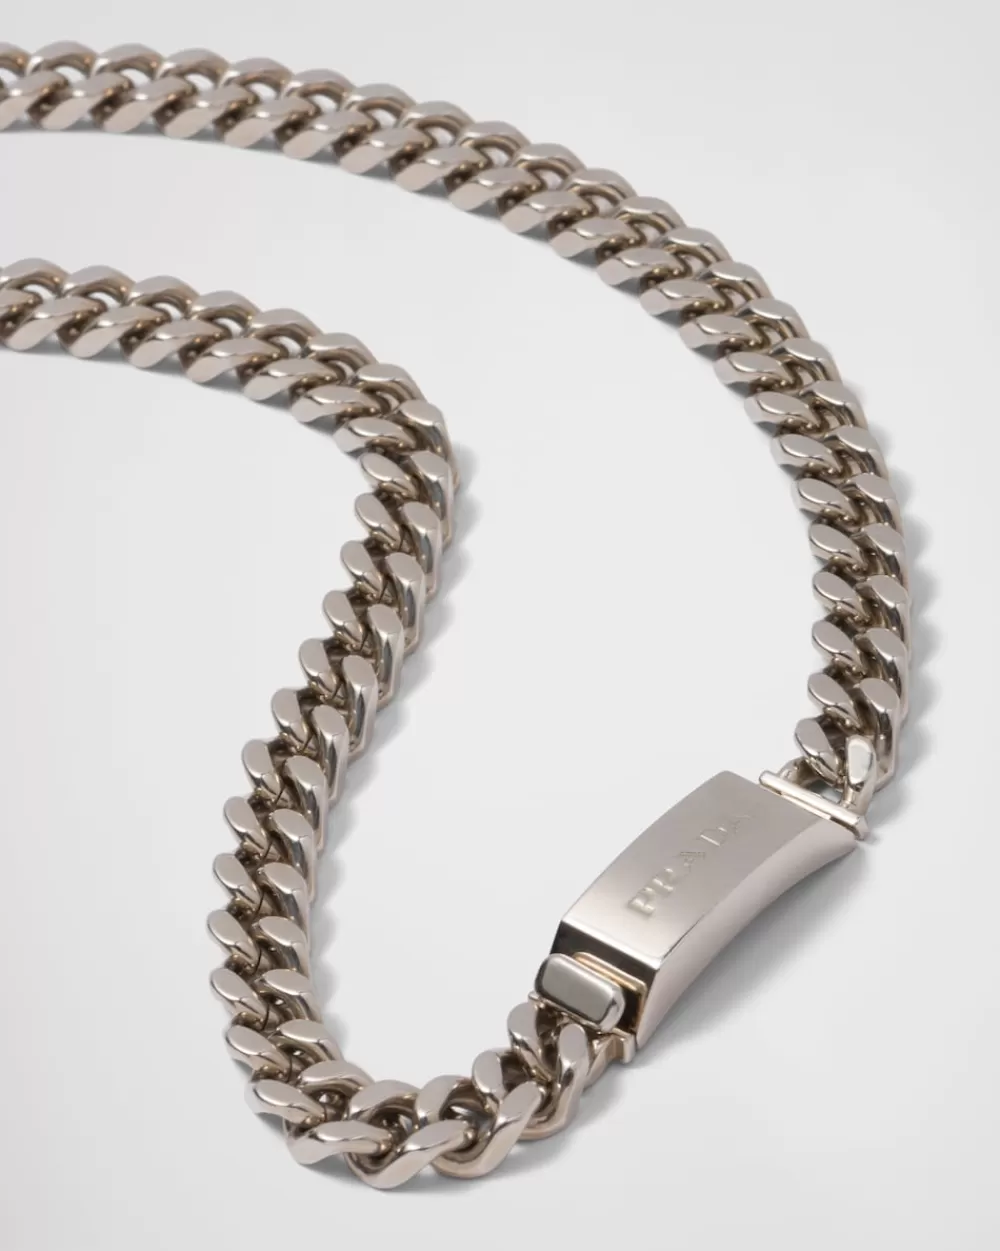 Uomo Prada Collana Chain Jewels